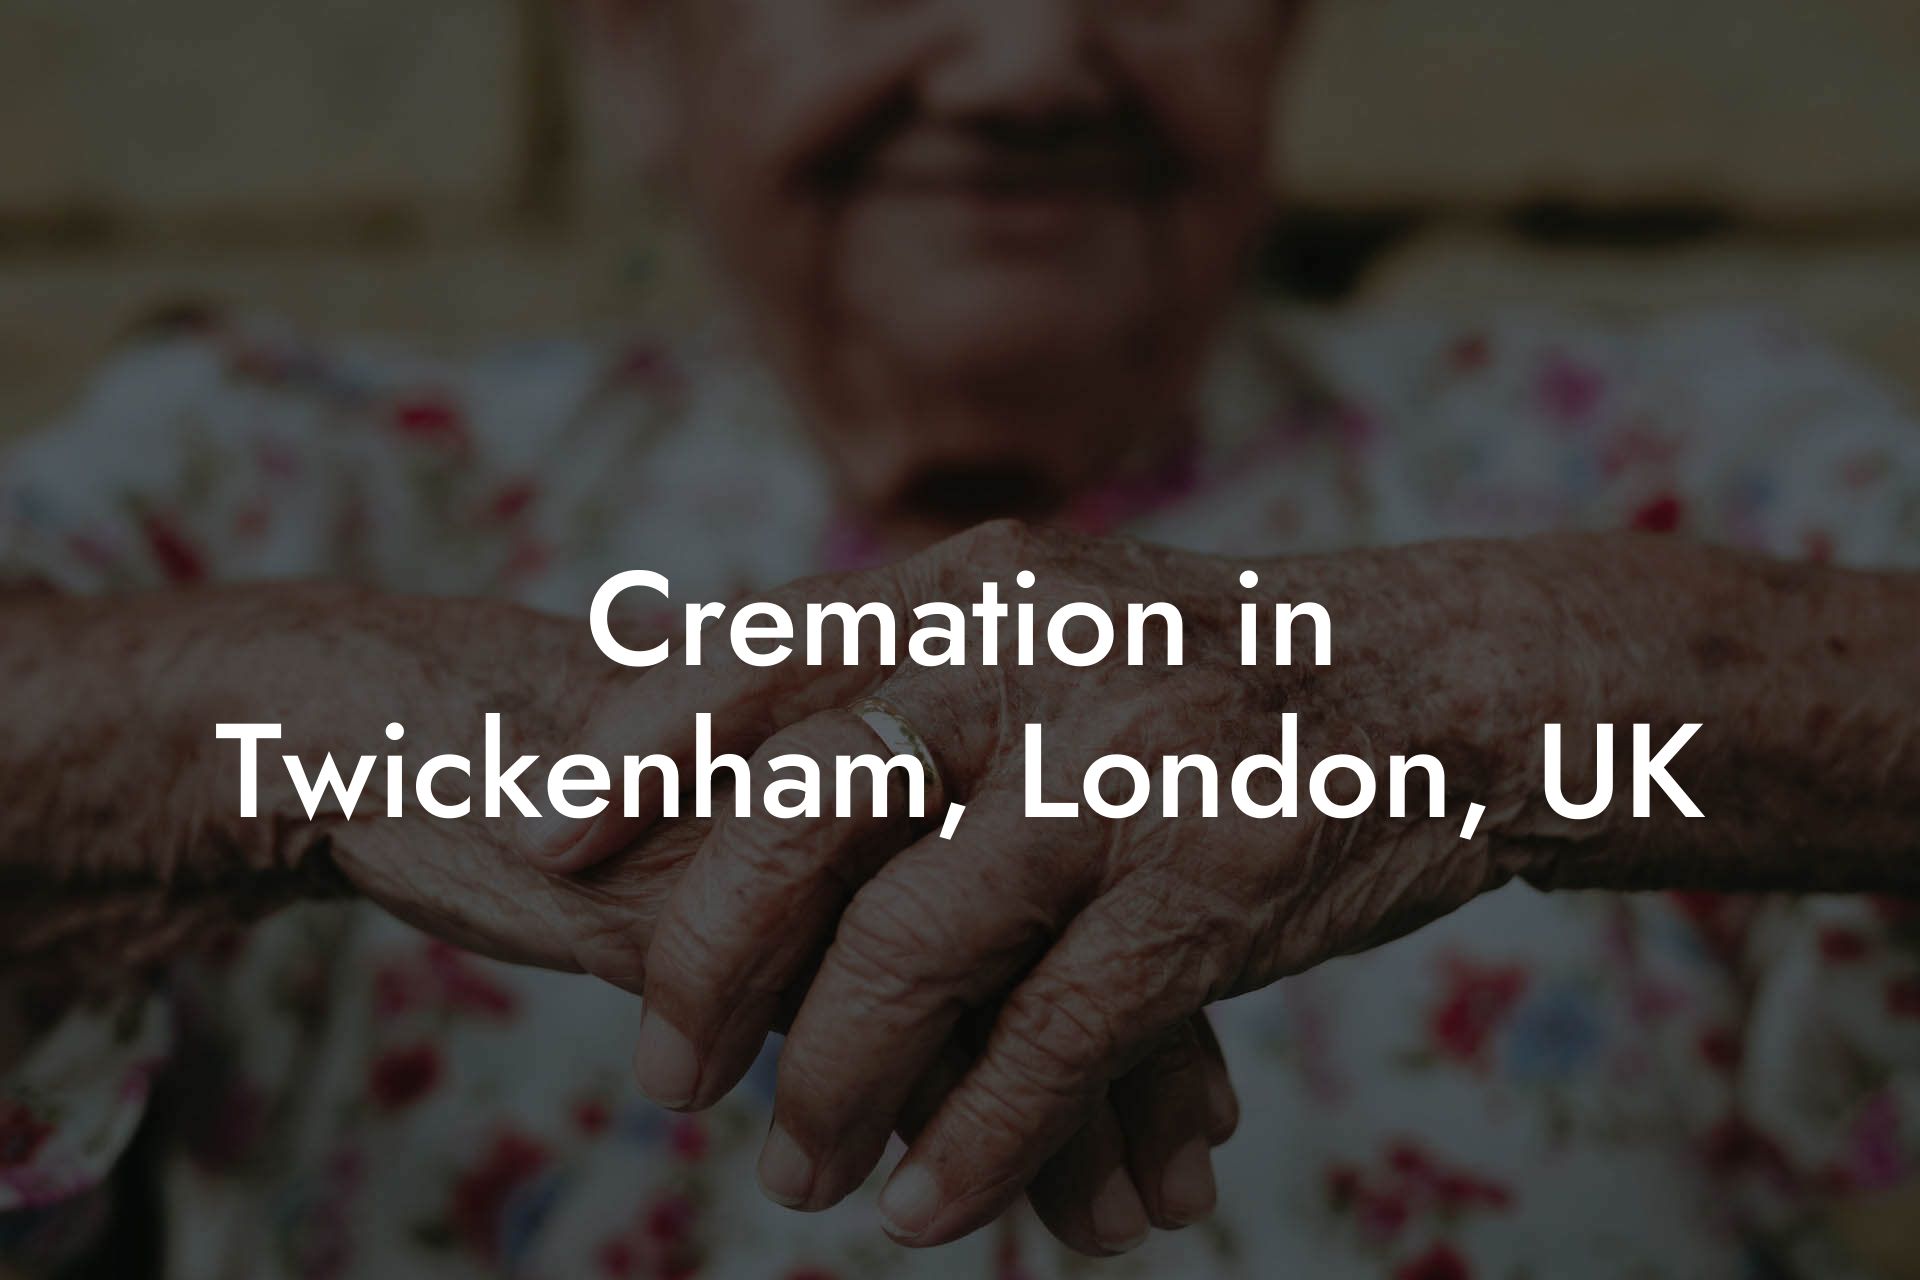 Cremation in Twickenham, London, UK